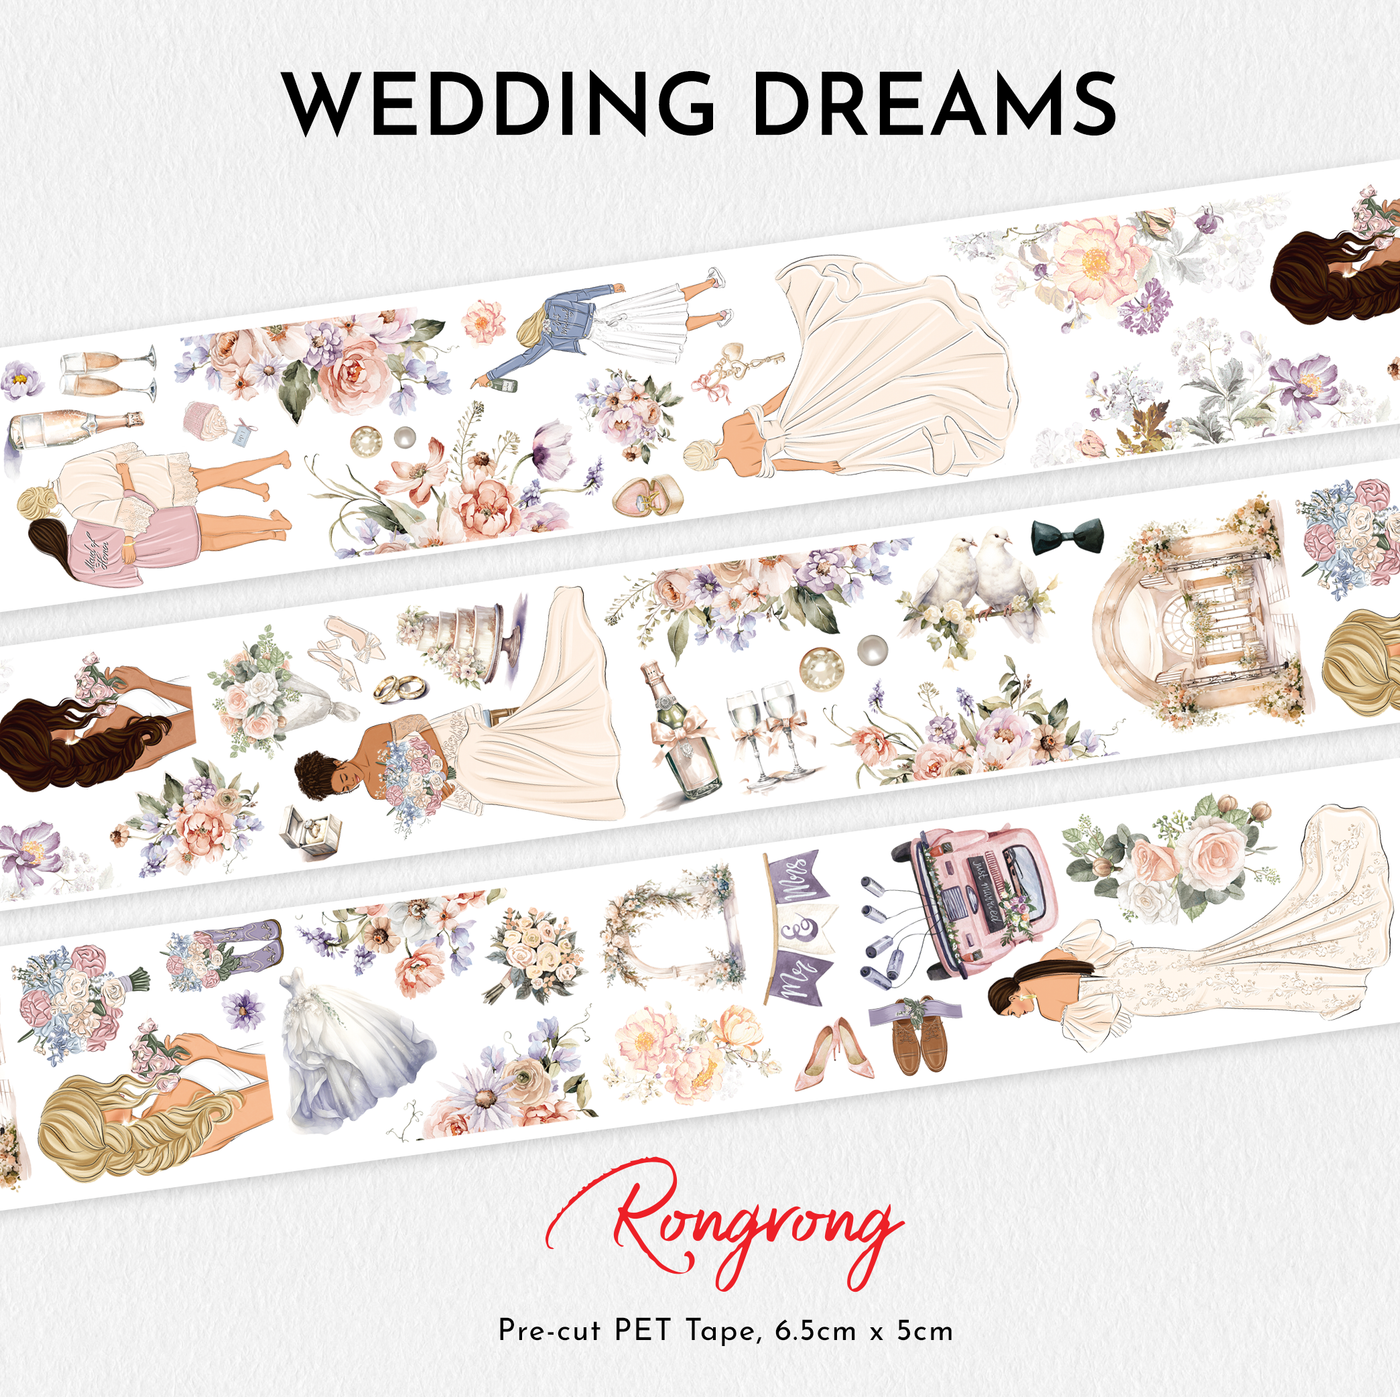 Rongrong Wedding Dreams PET Tape